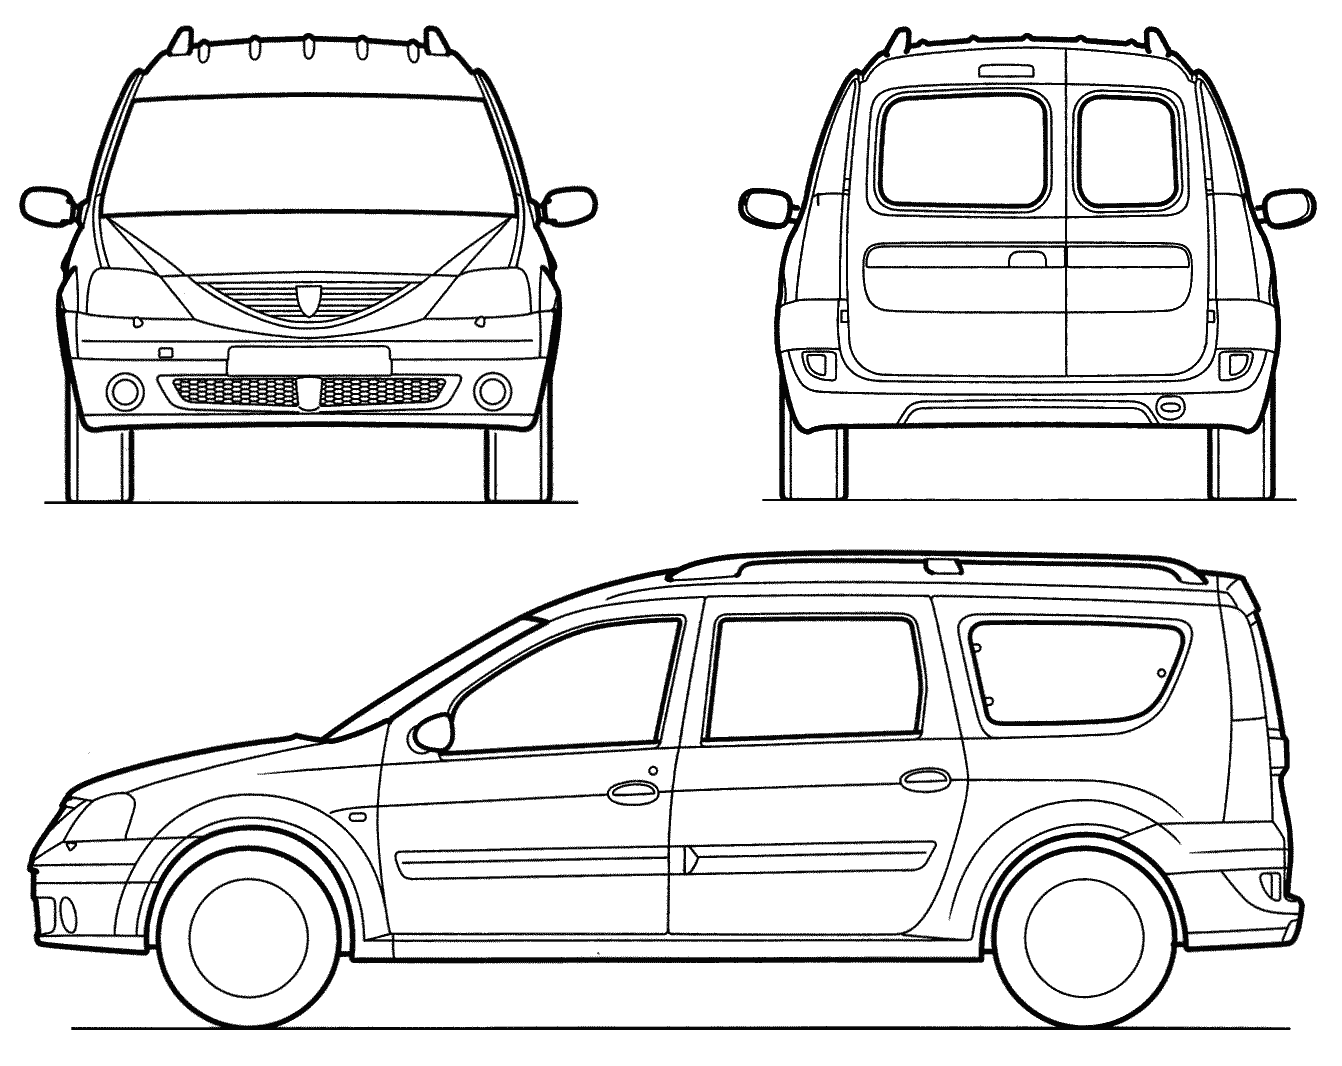 Dacia Logan blueprint